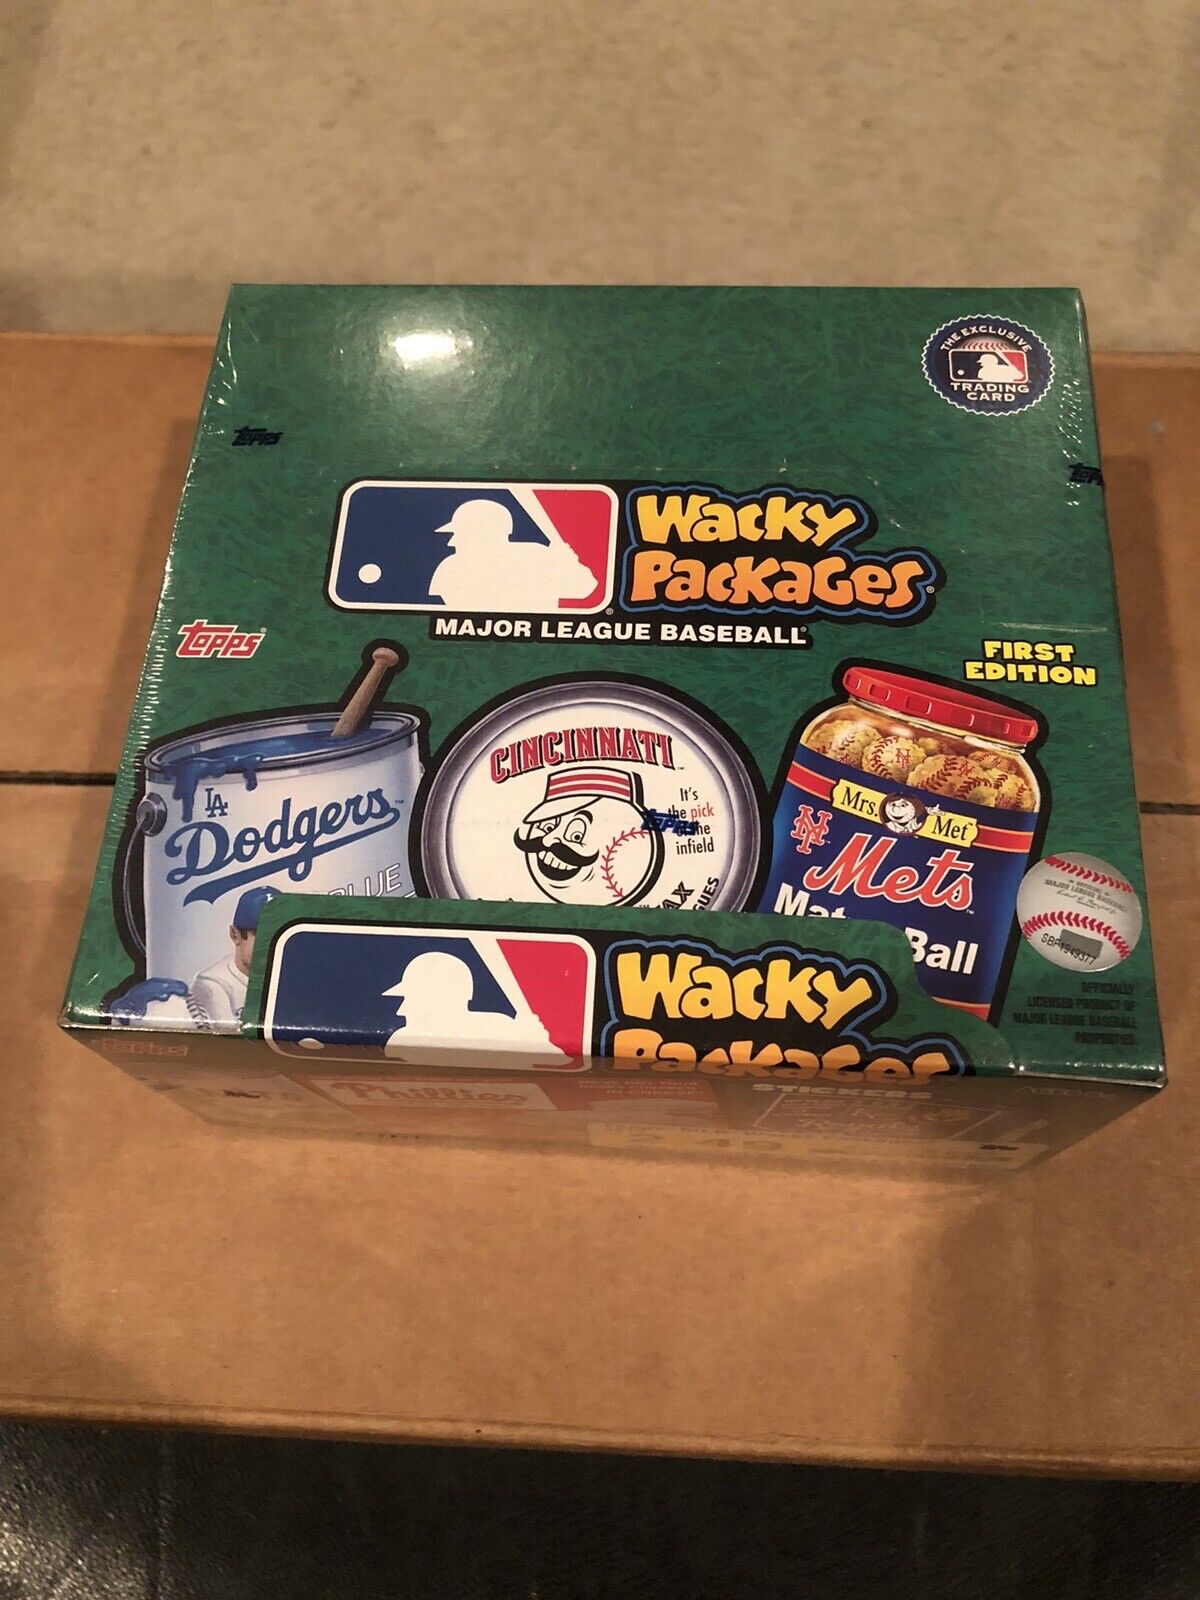 2016 Topps Wacky Packages 1st Edition Major League Baseball Hobby Box 24 Packs